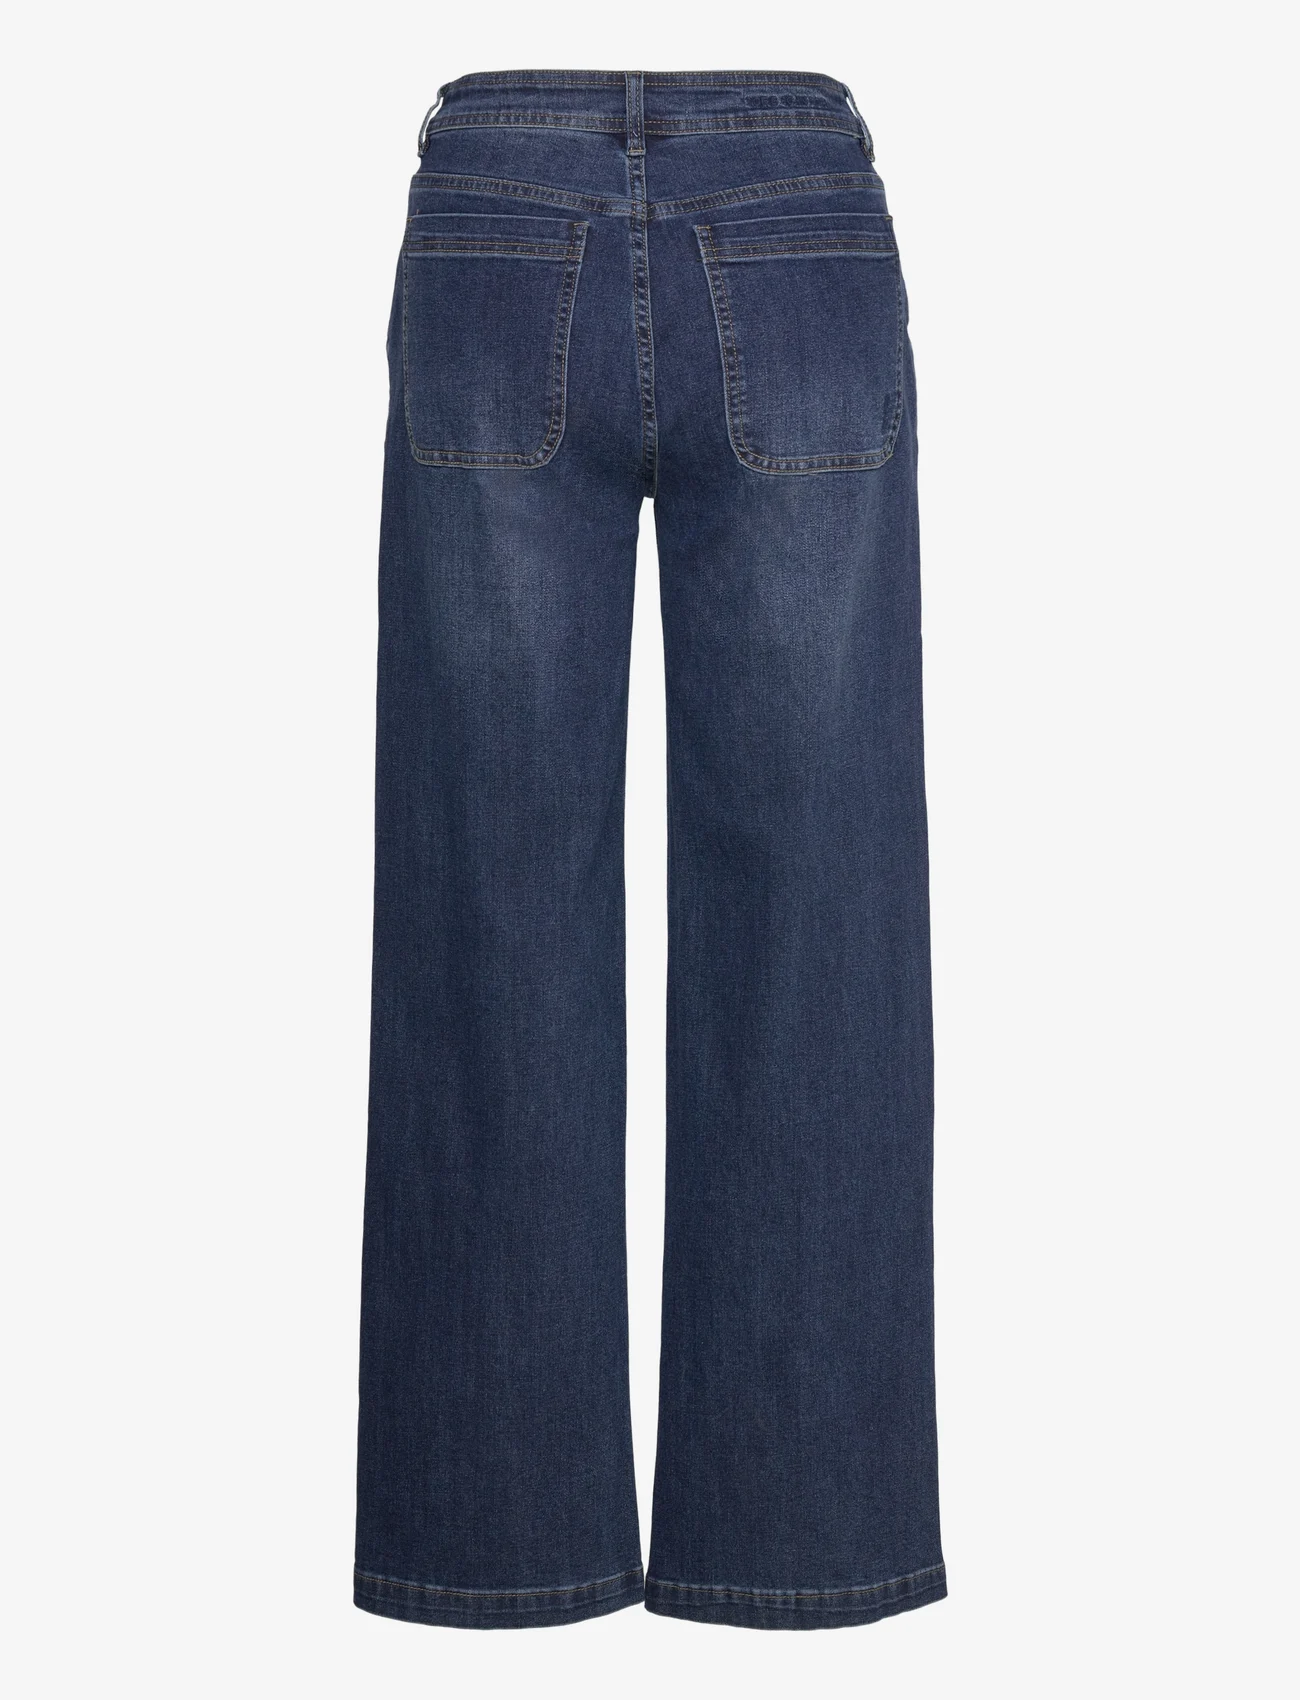 Sofie Schnoor - Jeans - bukser med brede ben - dark denim blue - 1